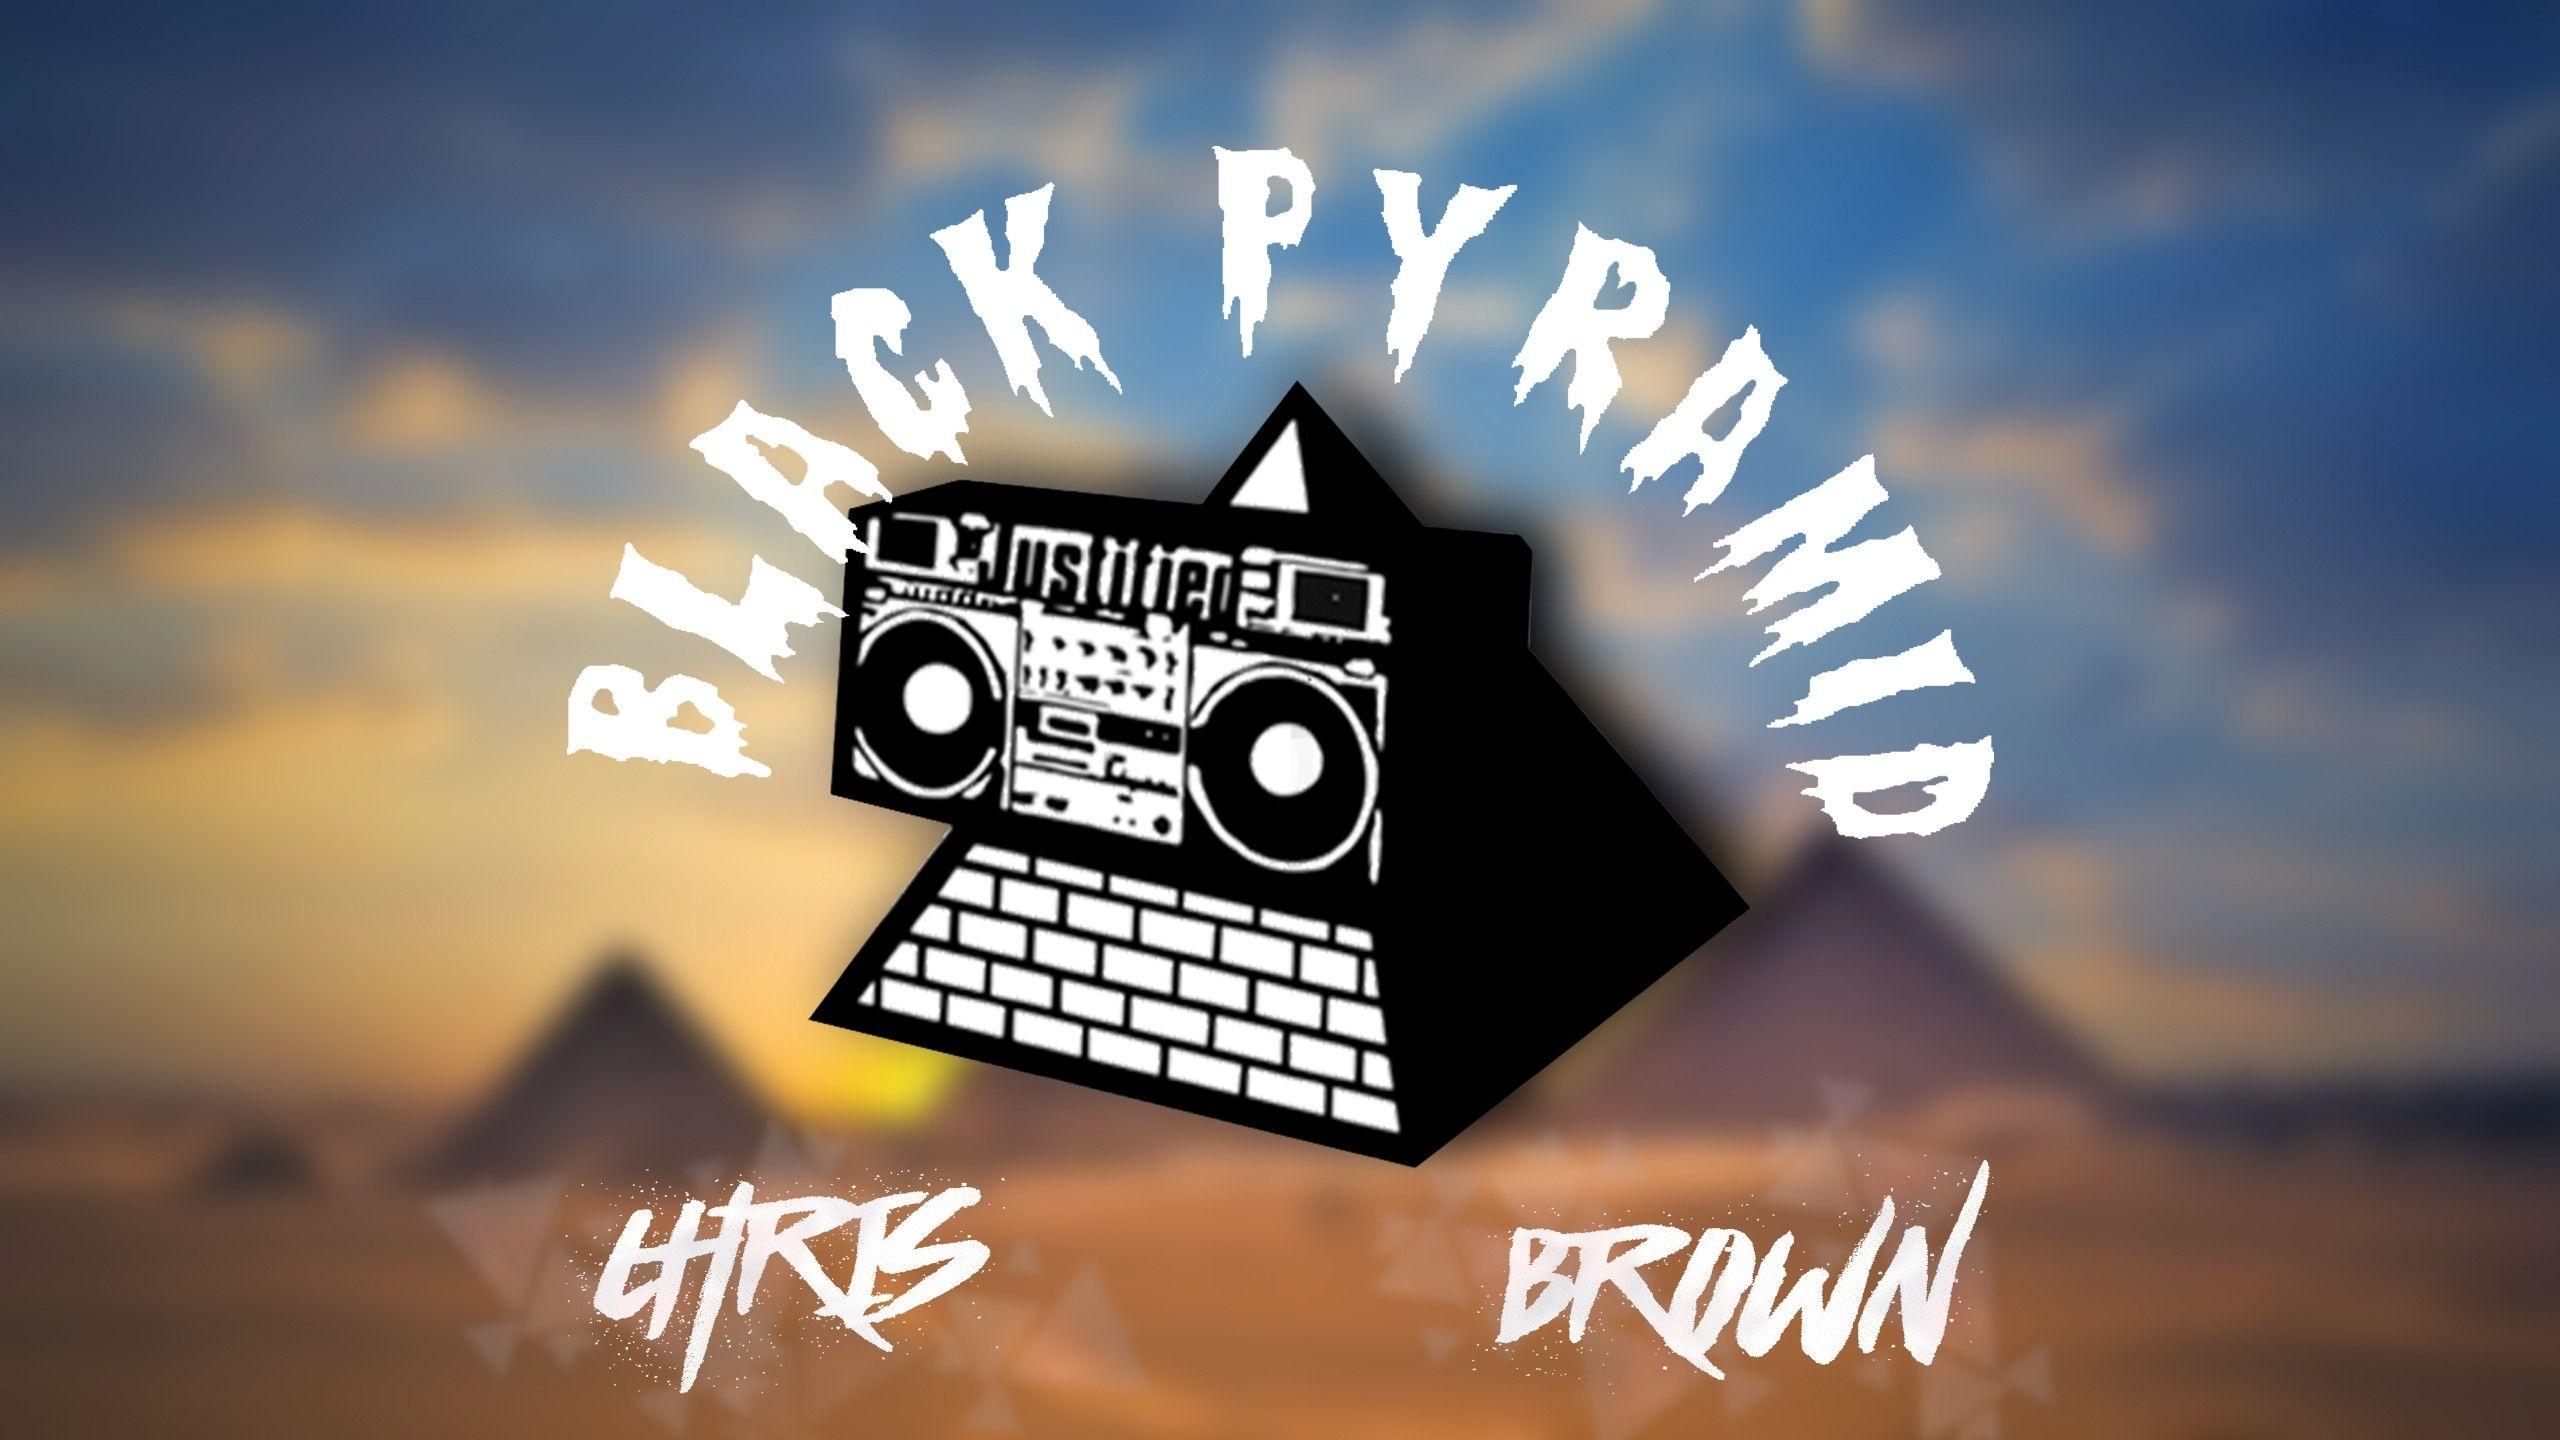 Black Pyramid Chris Brown Logo - Wallpaper : illustration, text, logo, graphic design, poster, brand ...